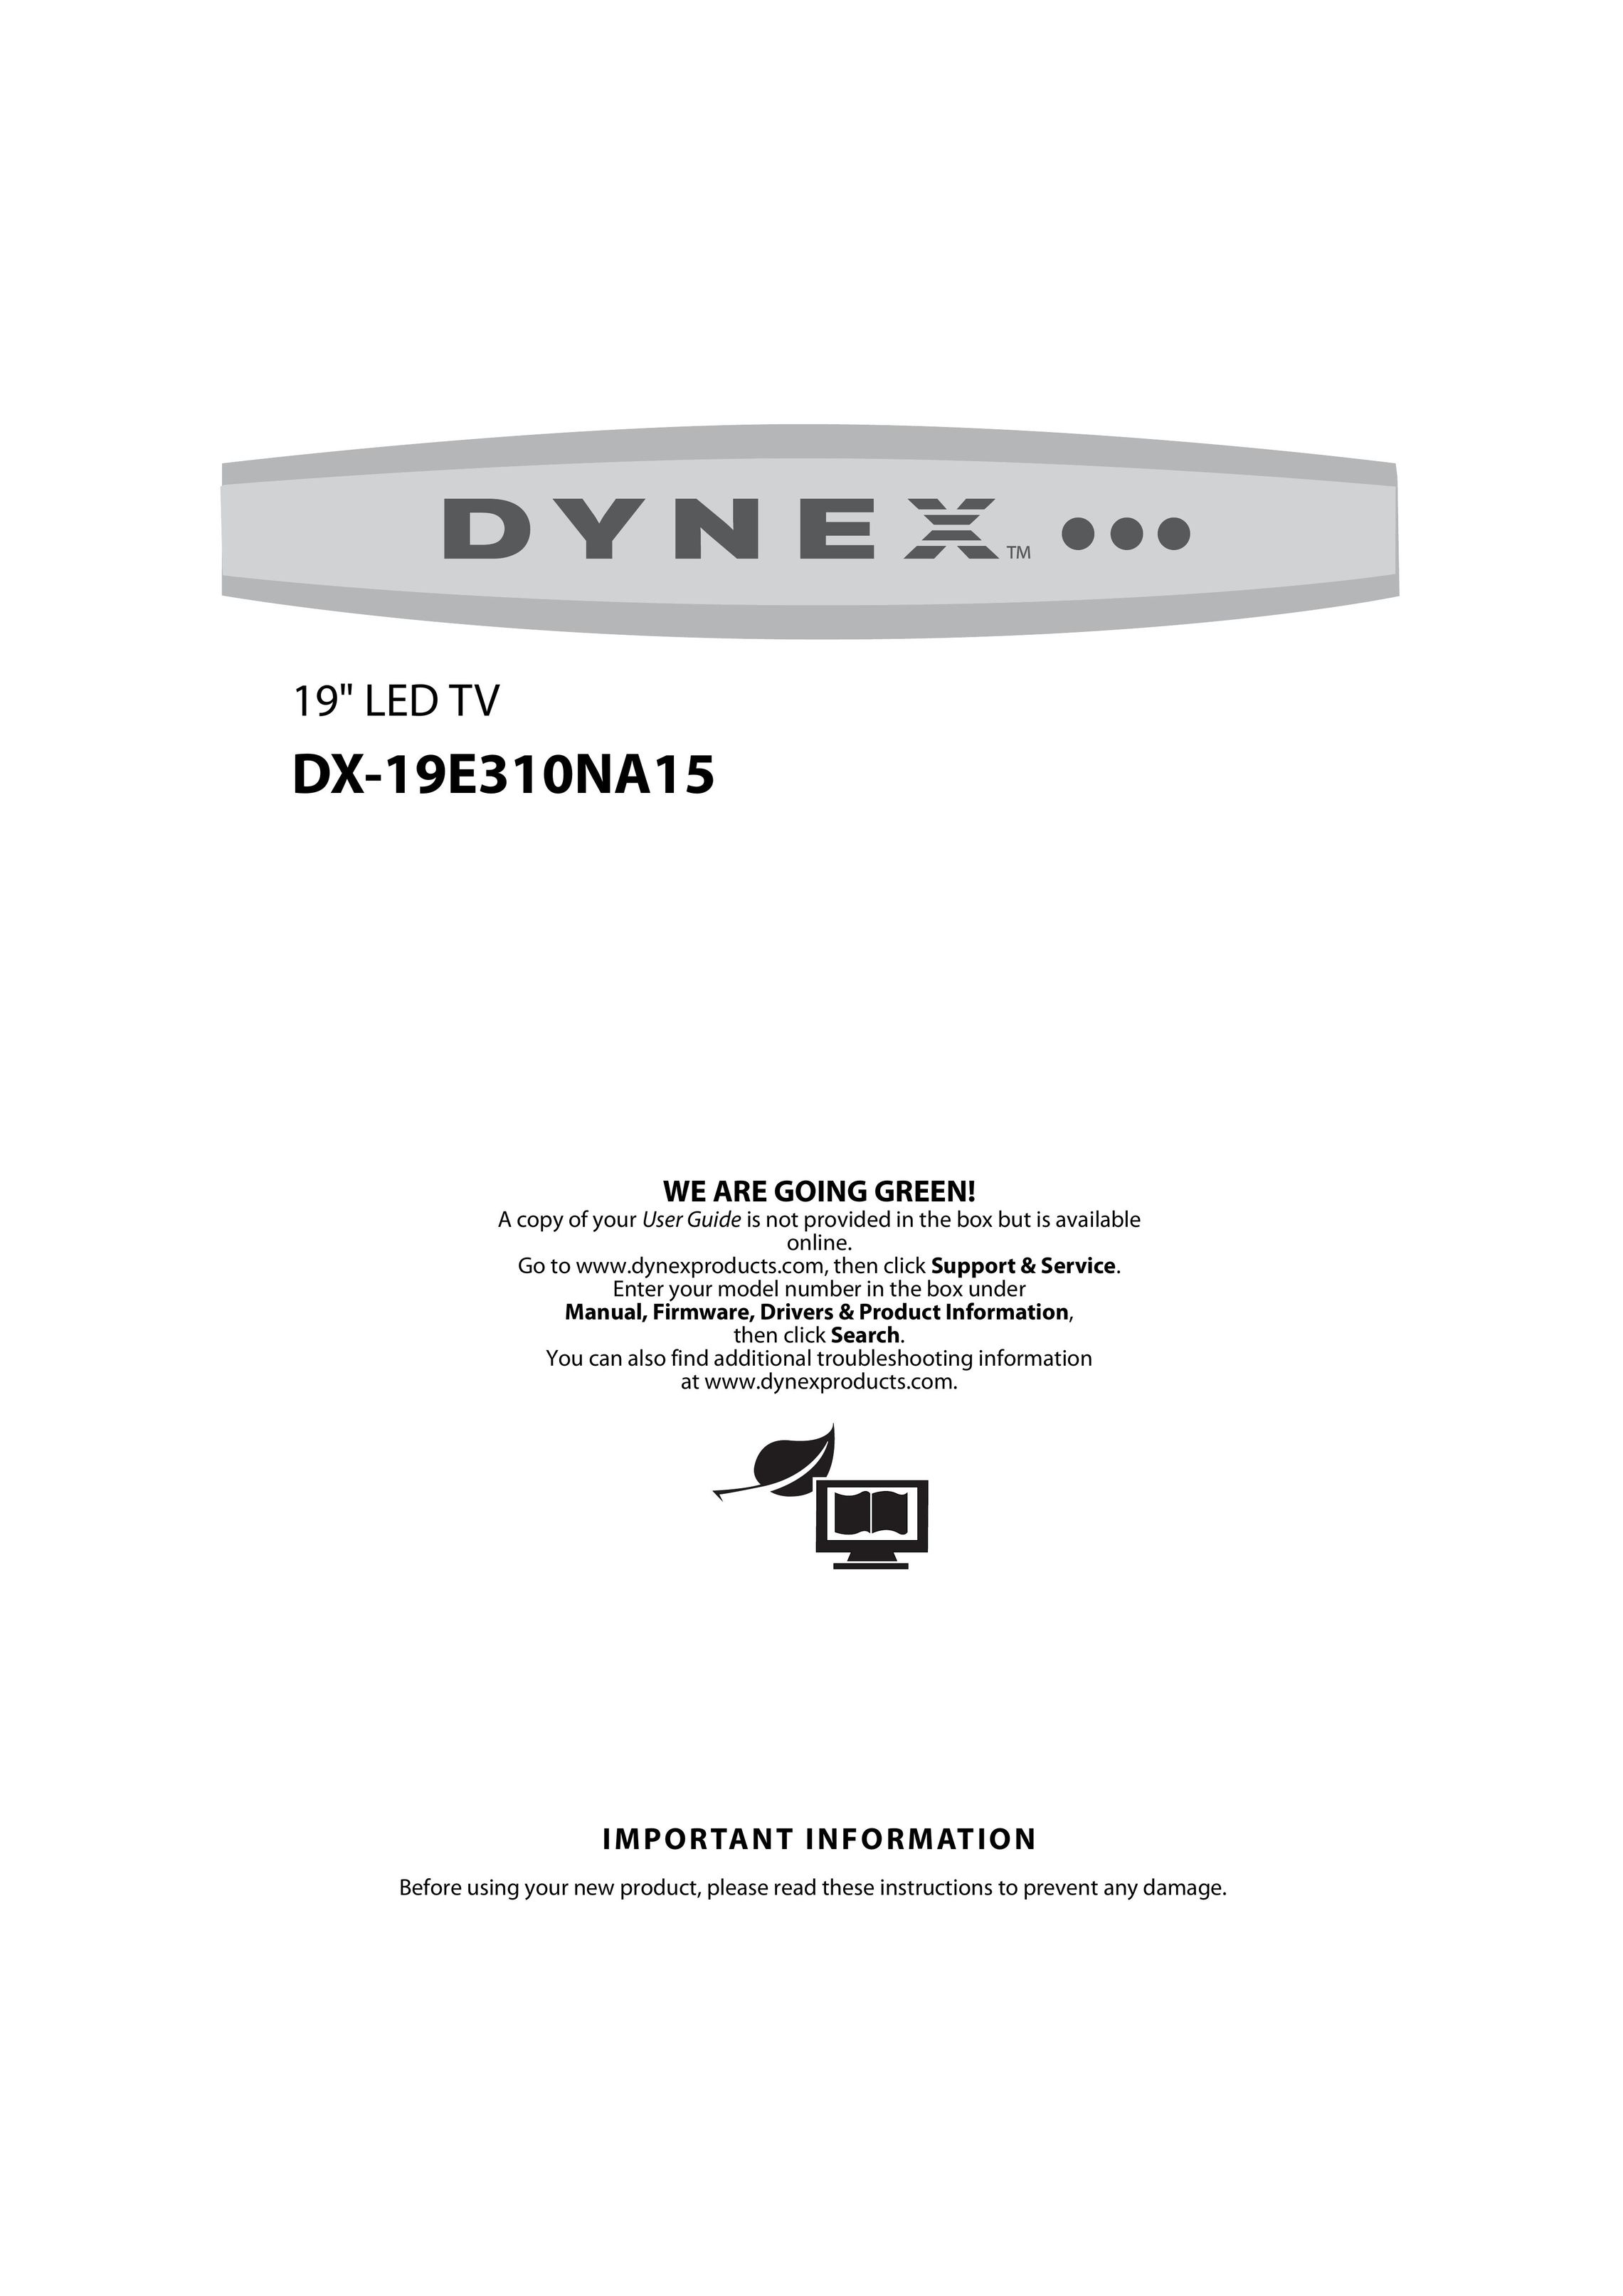 Dynex DX-19E310NA15 Car Satellite TV System User Manual